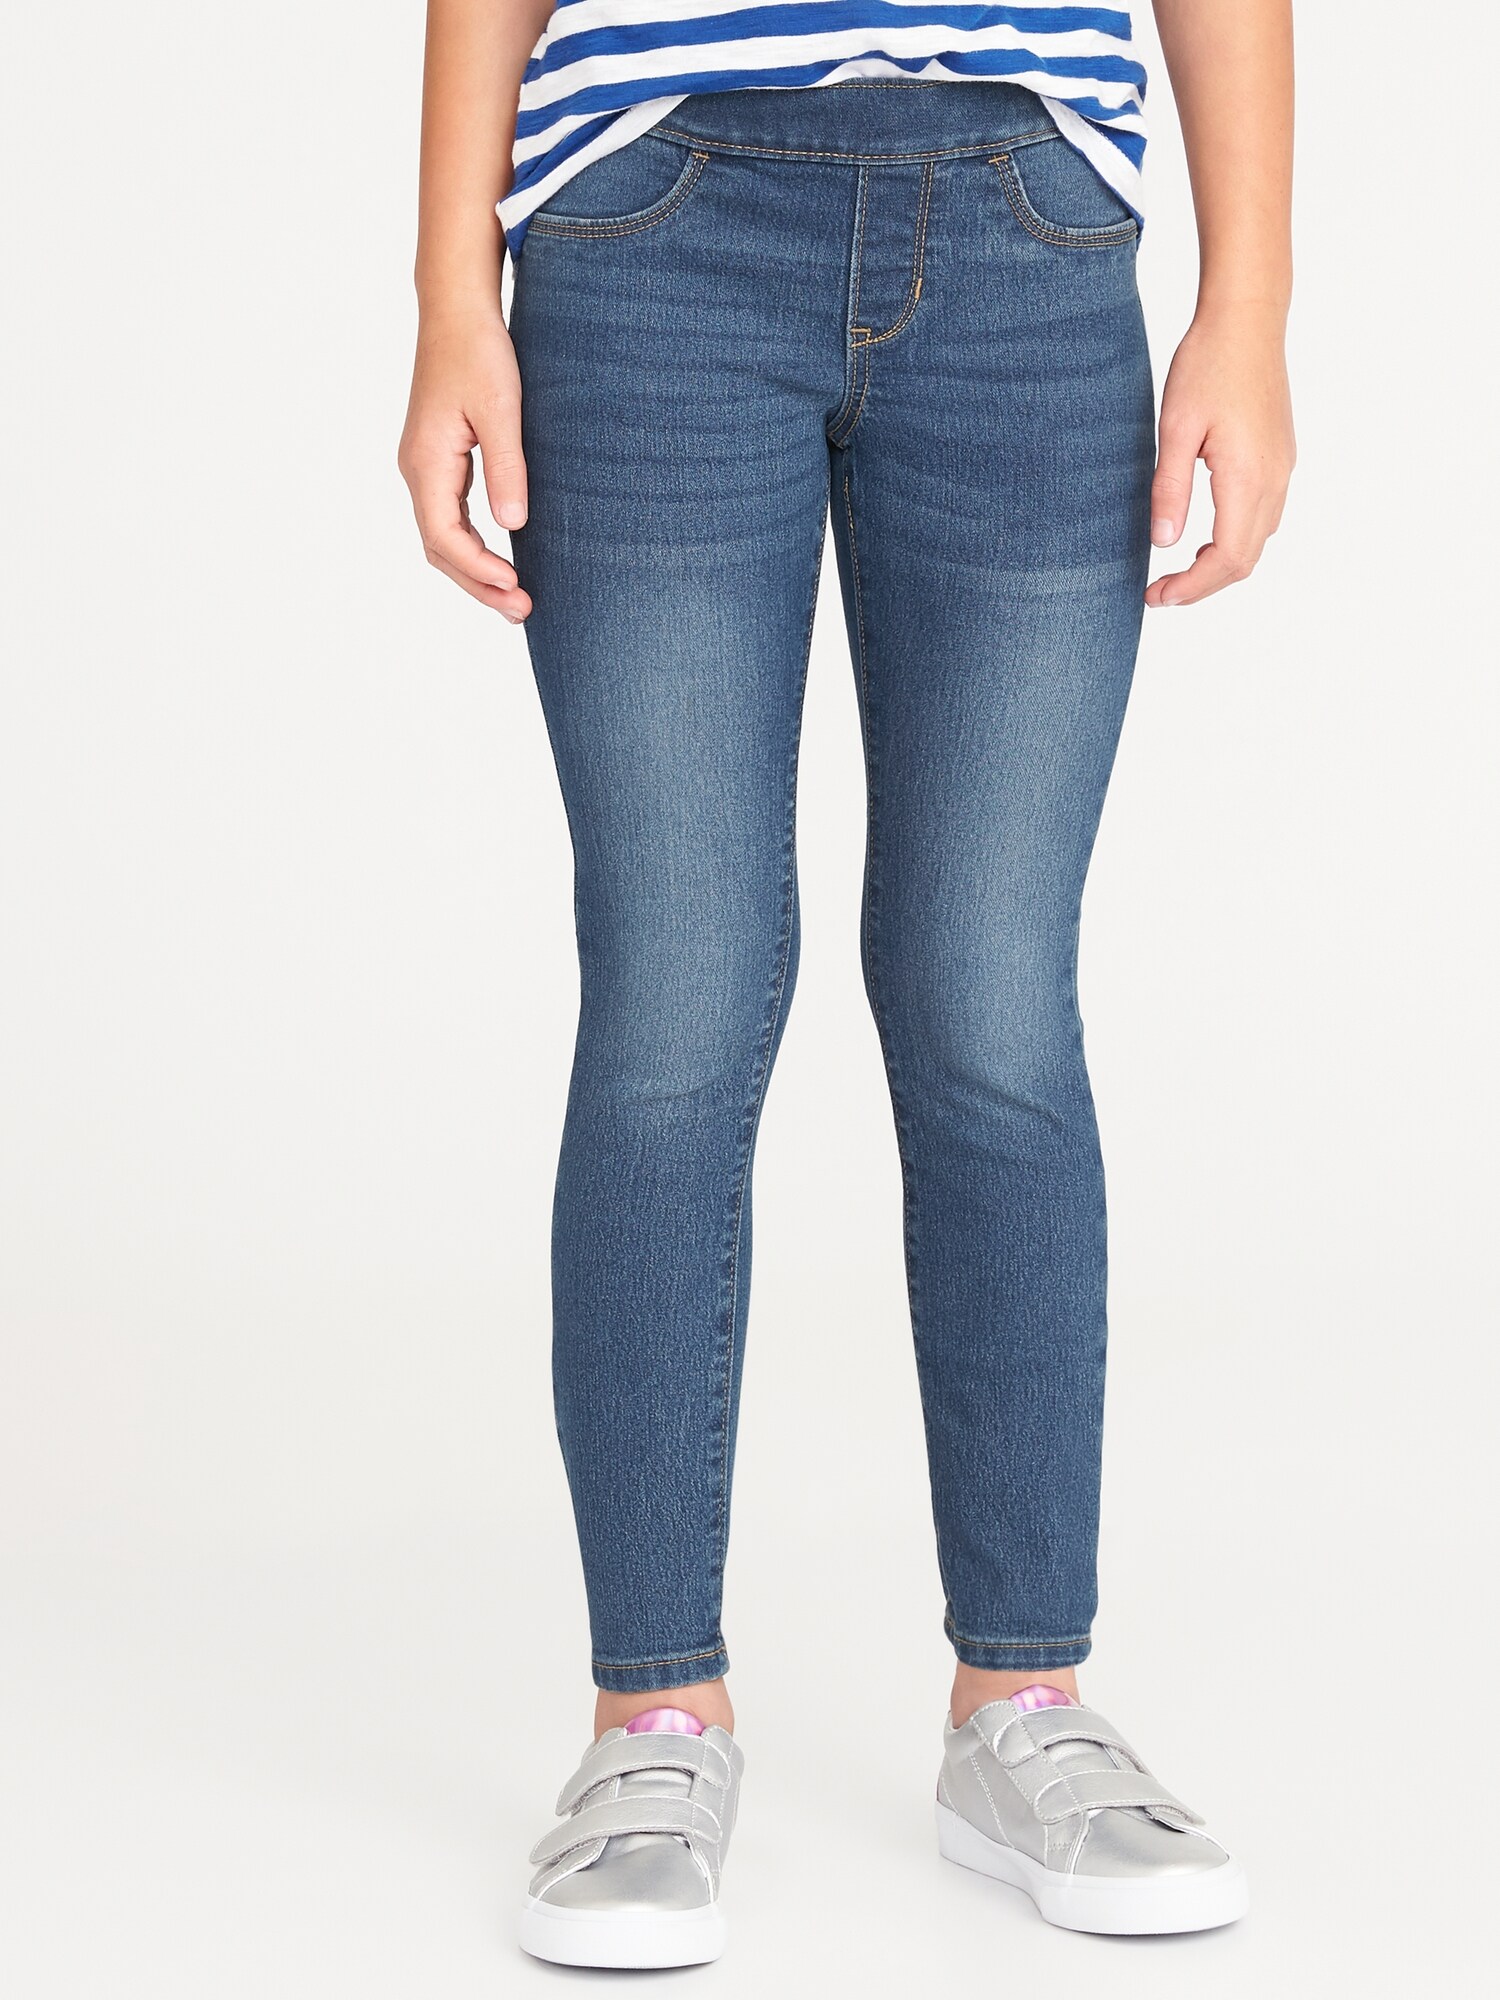 Skinny Built-In Tough Pull-On Jeans for Girls